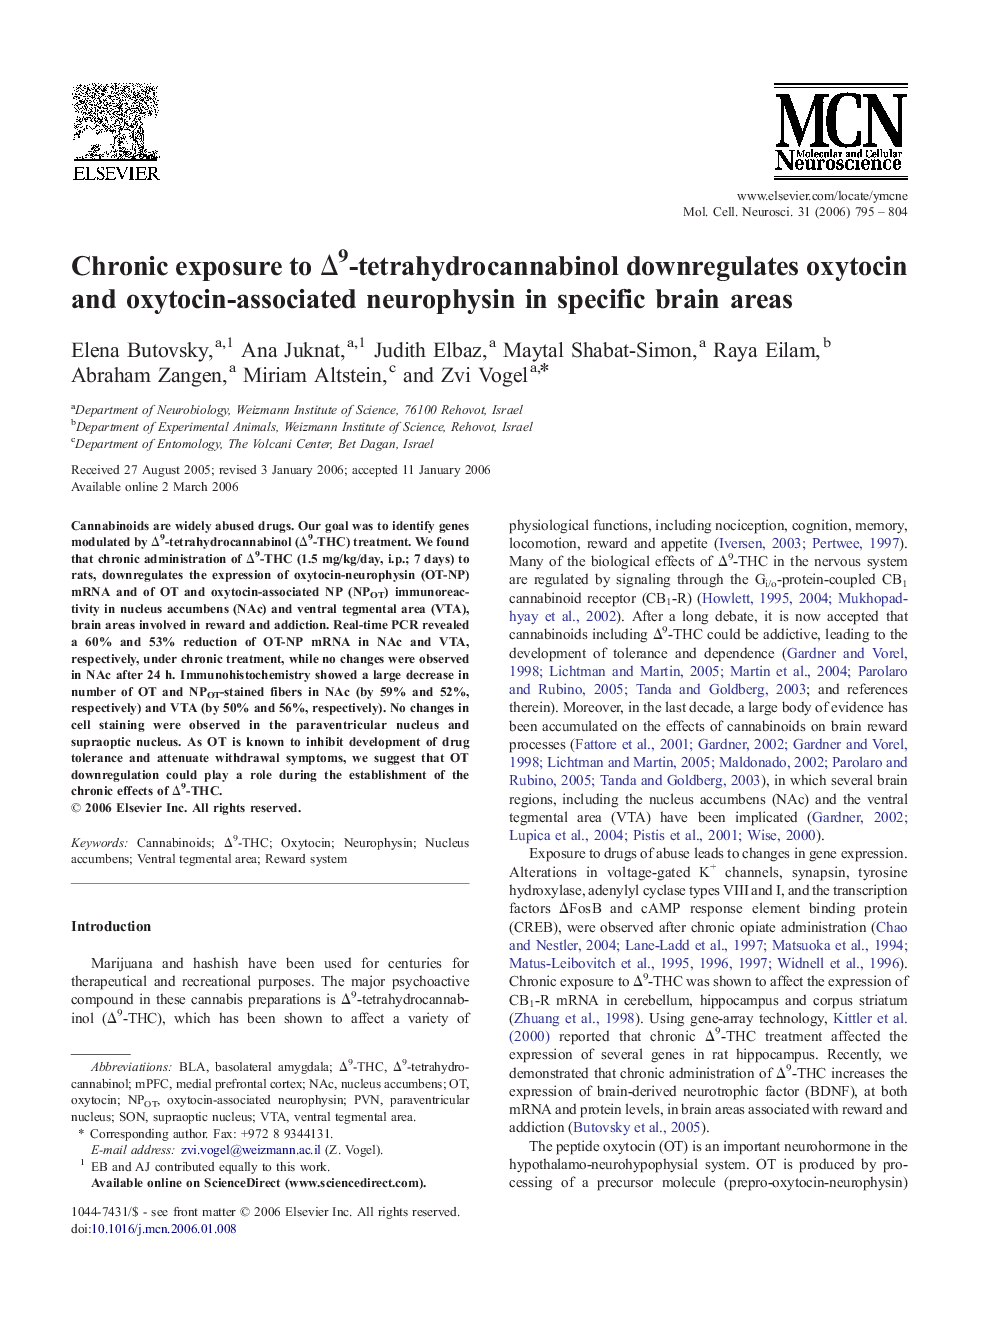 Chronic exposure to Δ9-tetrahydrocannabinol downregulates oxytocin and oxytocin-associated neurophysin in specific brain areas